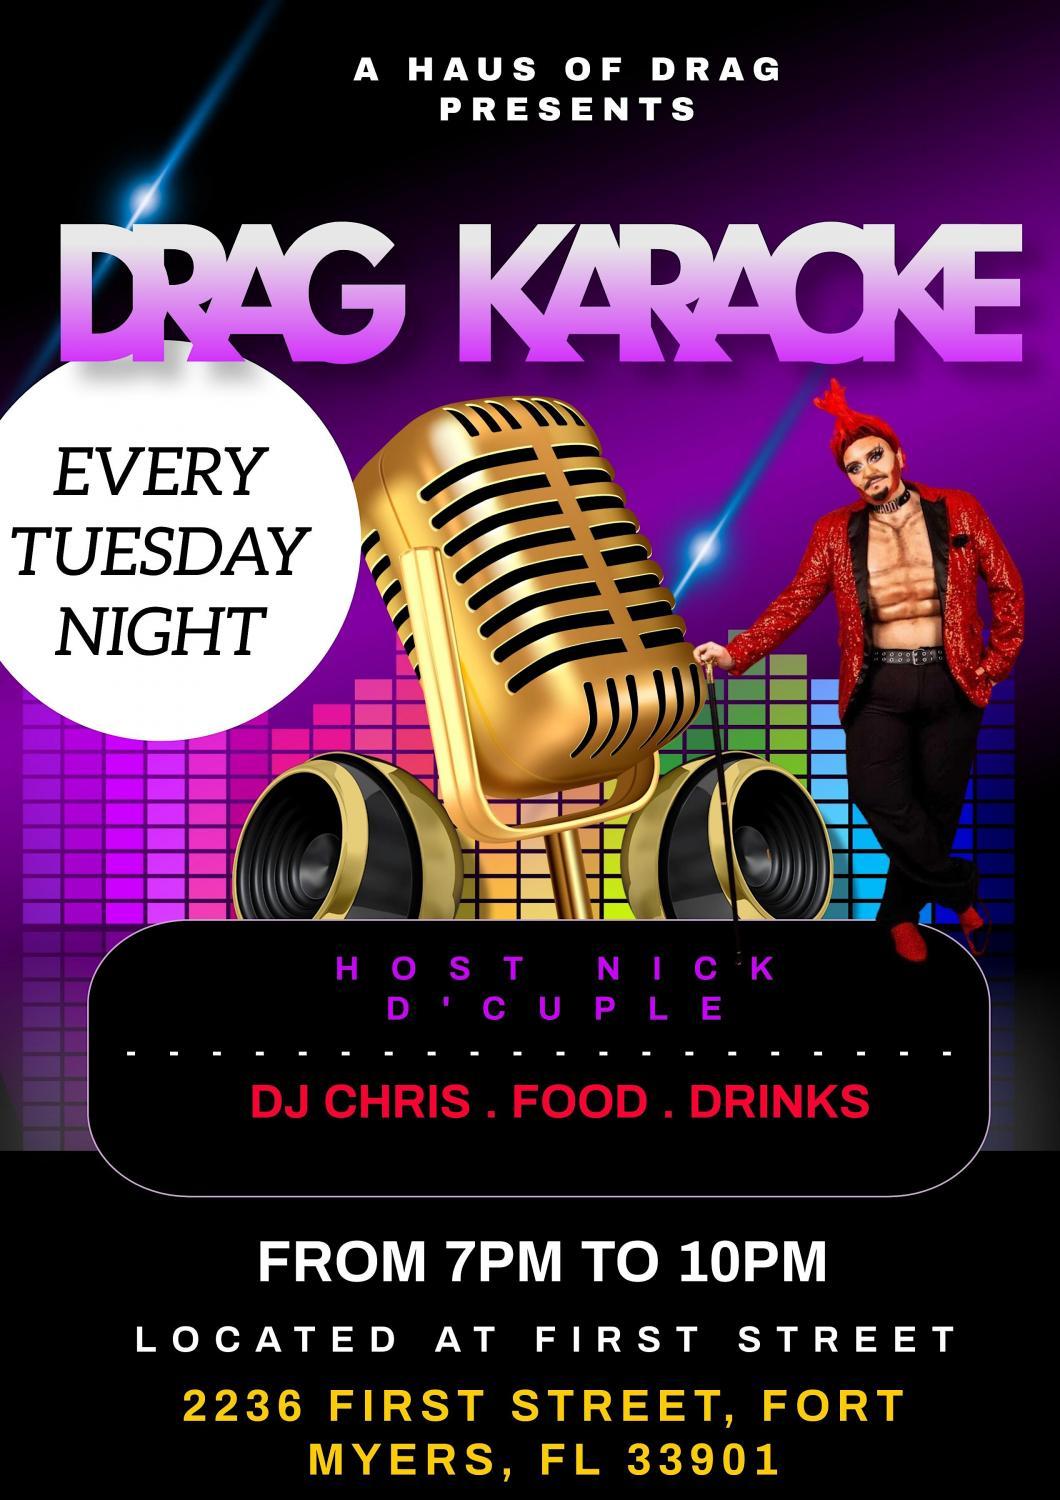 Drag Karaoke @ First Street!
Tue Dec 13, 7:00 PM - Tue Dec 13, 10:00 PM
in 39 days